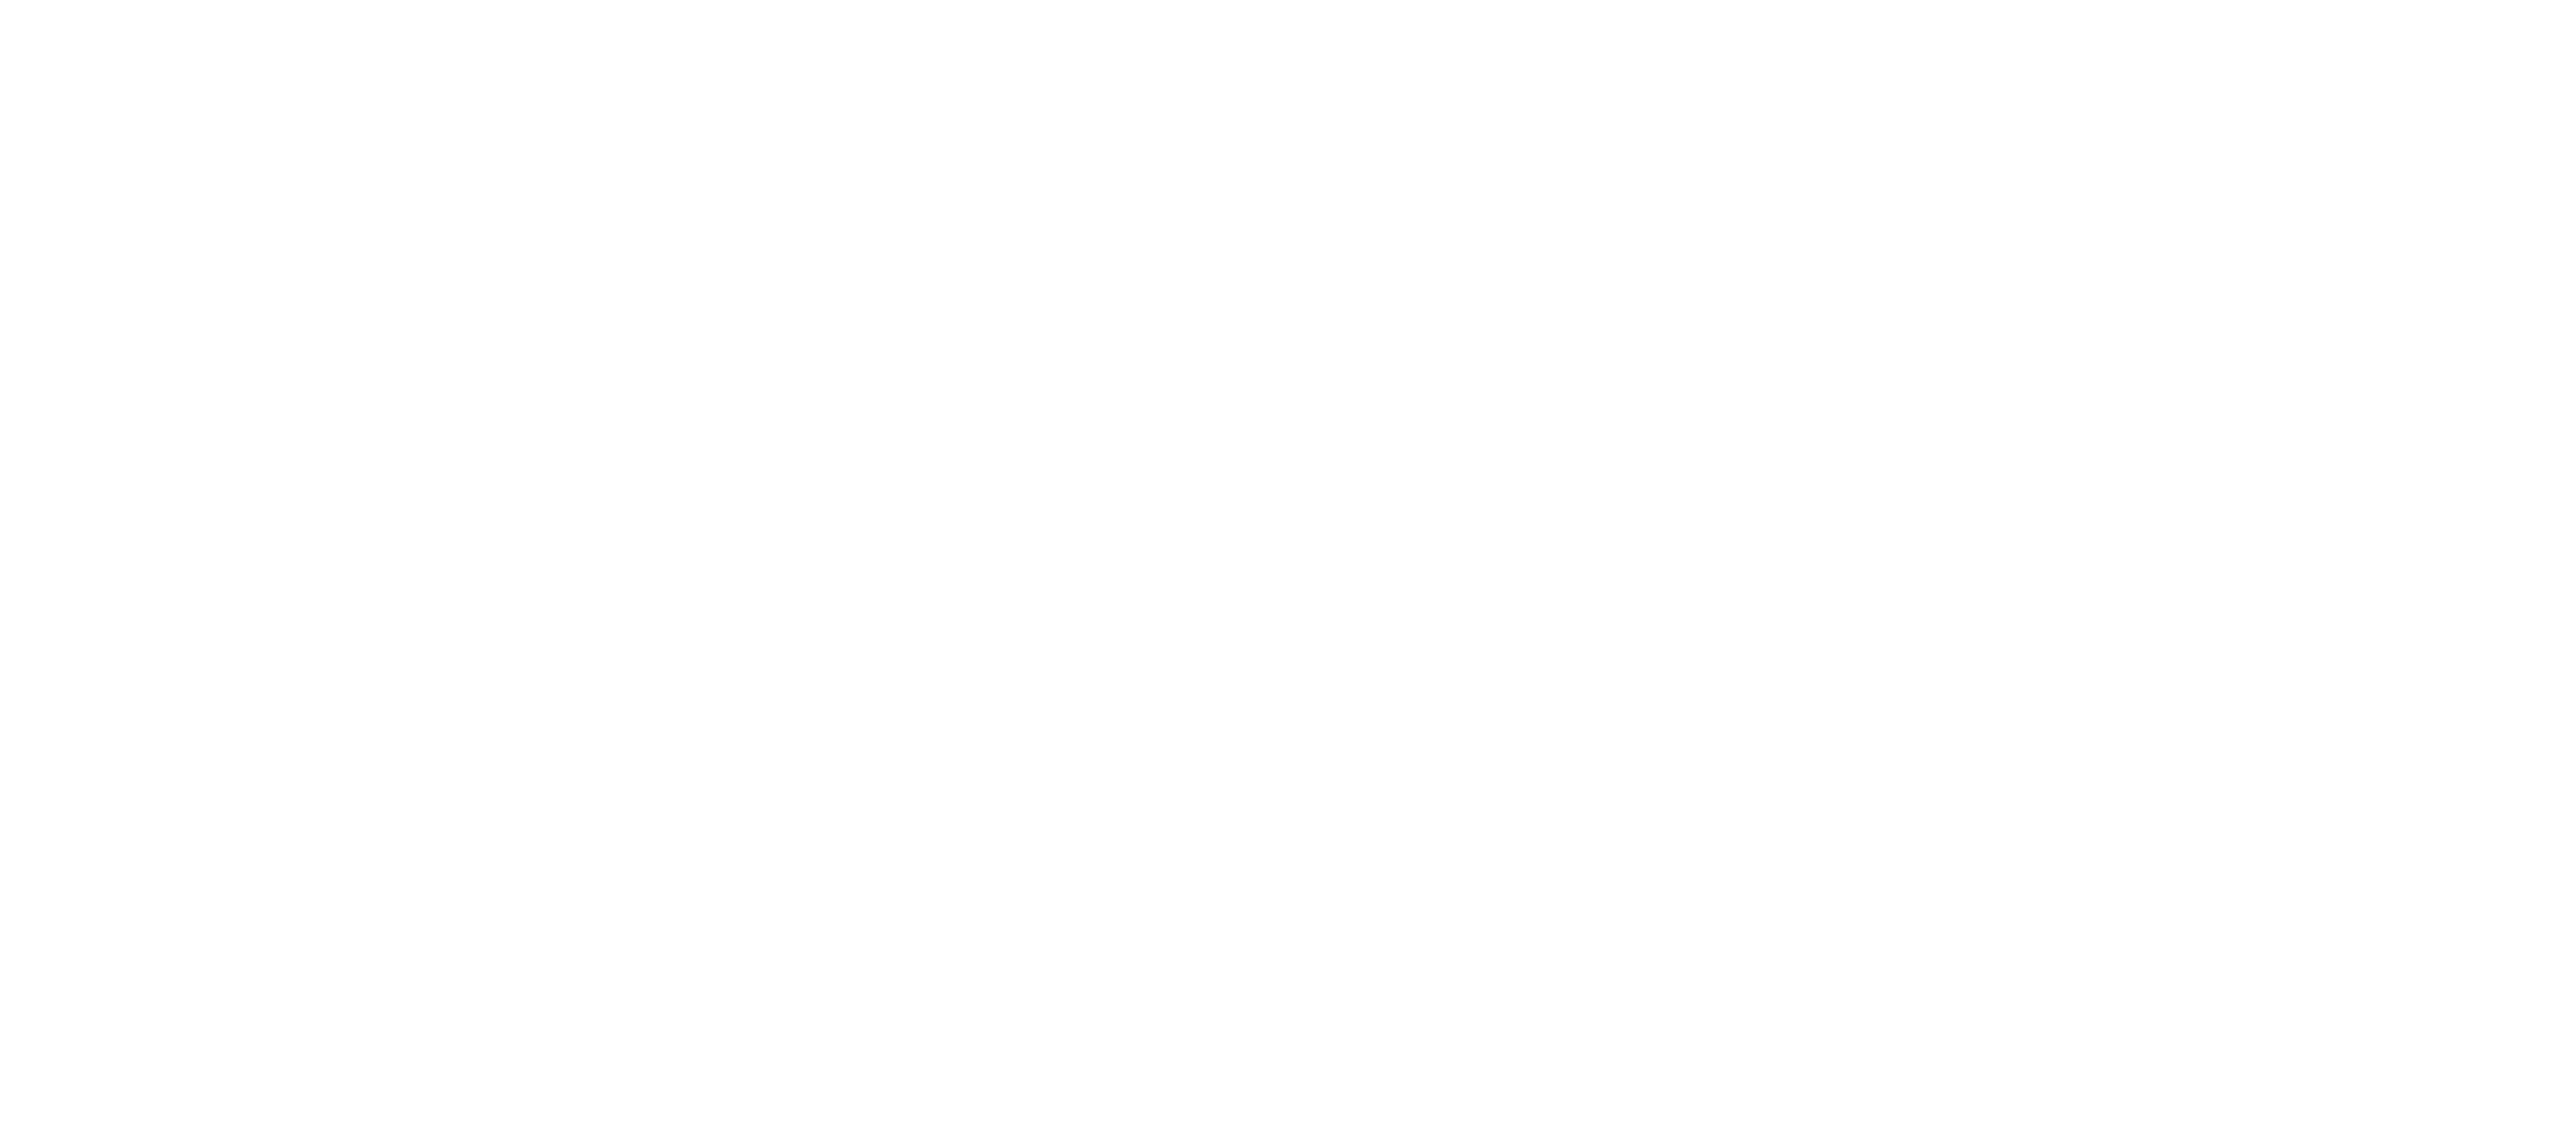 CCSU Logo